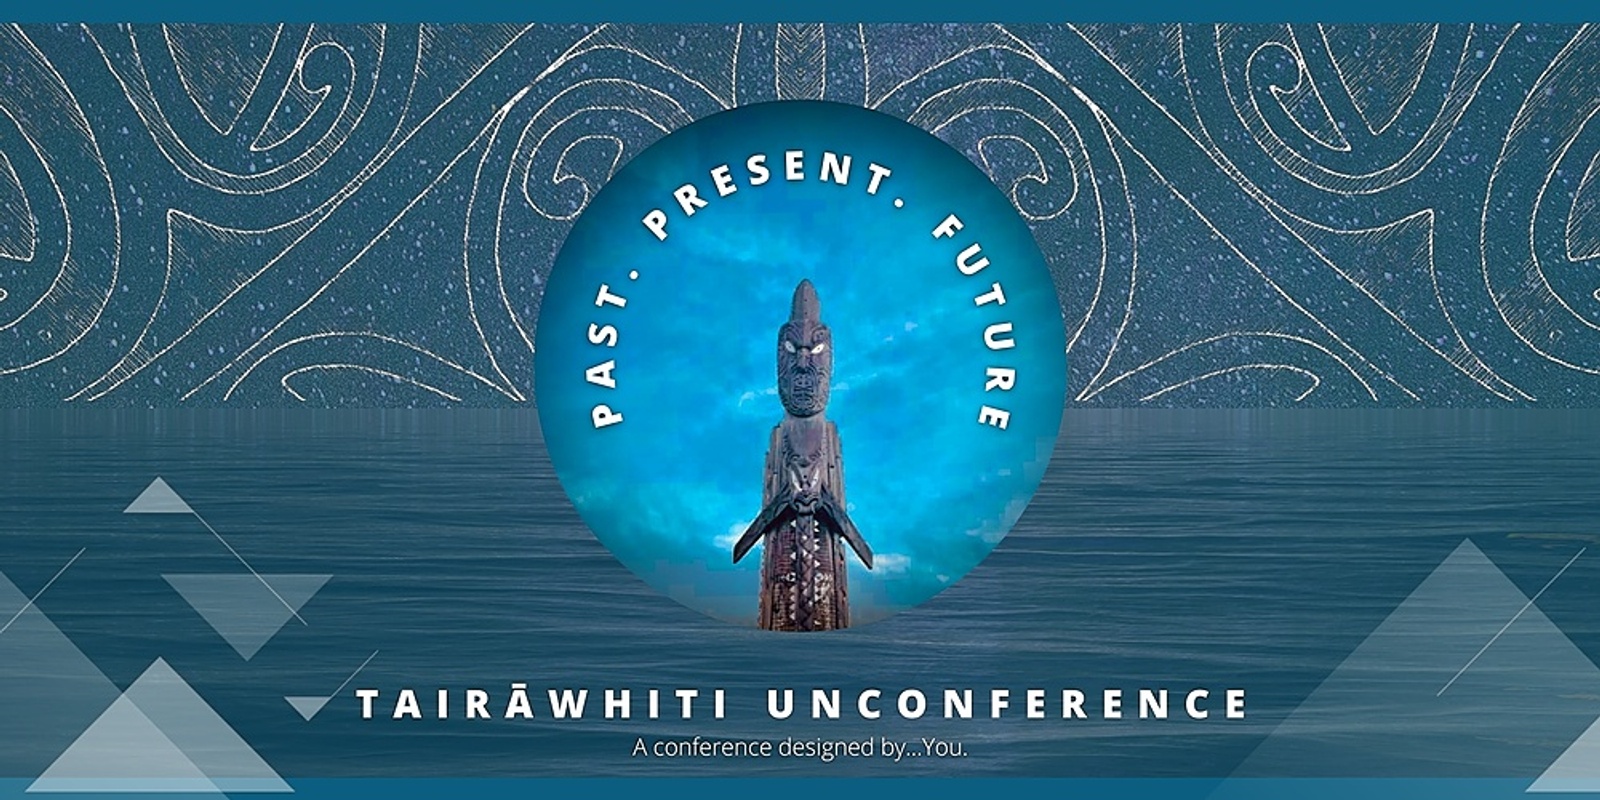 Tairāwhiti Unconference - Past, Present, Future